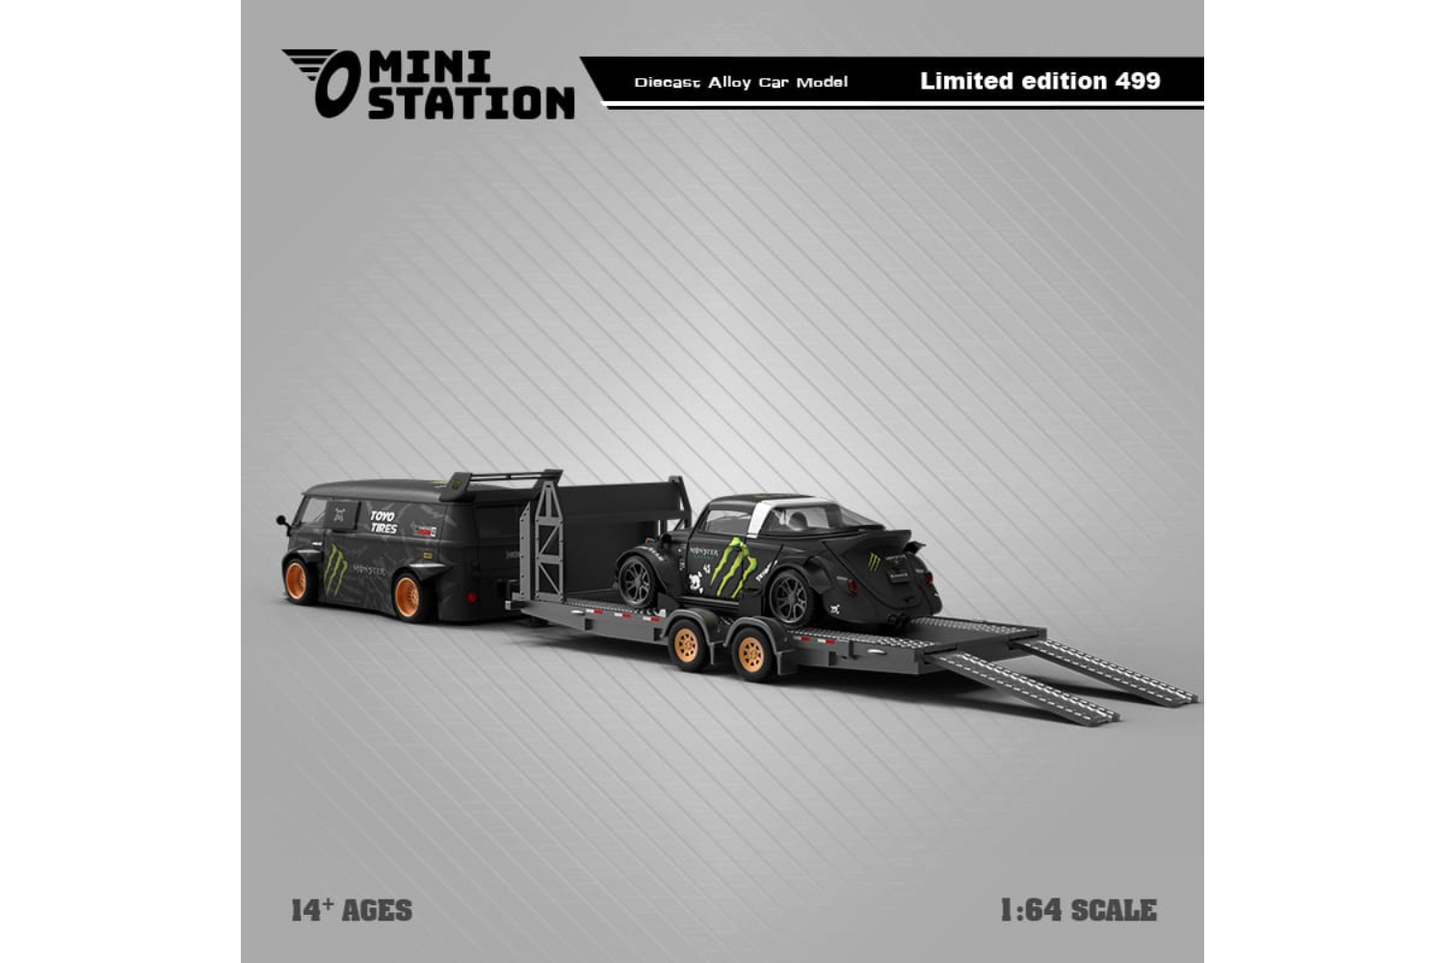 Mini Station 1/64 RWB VW T1 Van and RWB VW Beetle Targa Trailer Set in Monster Livery